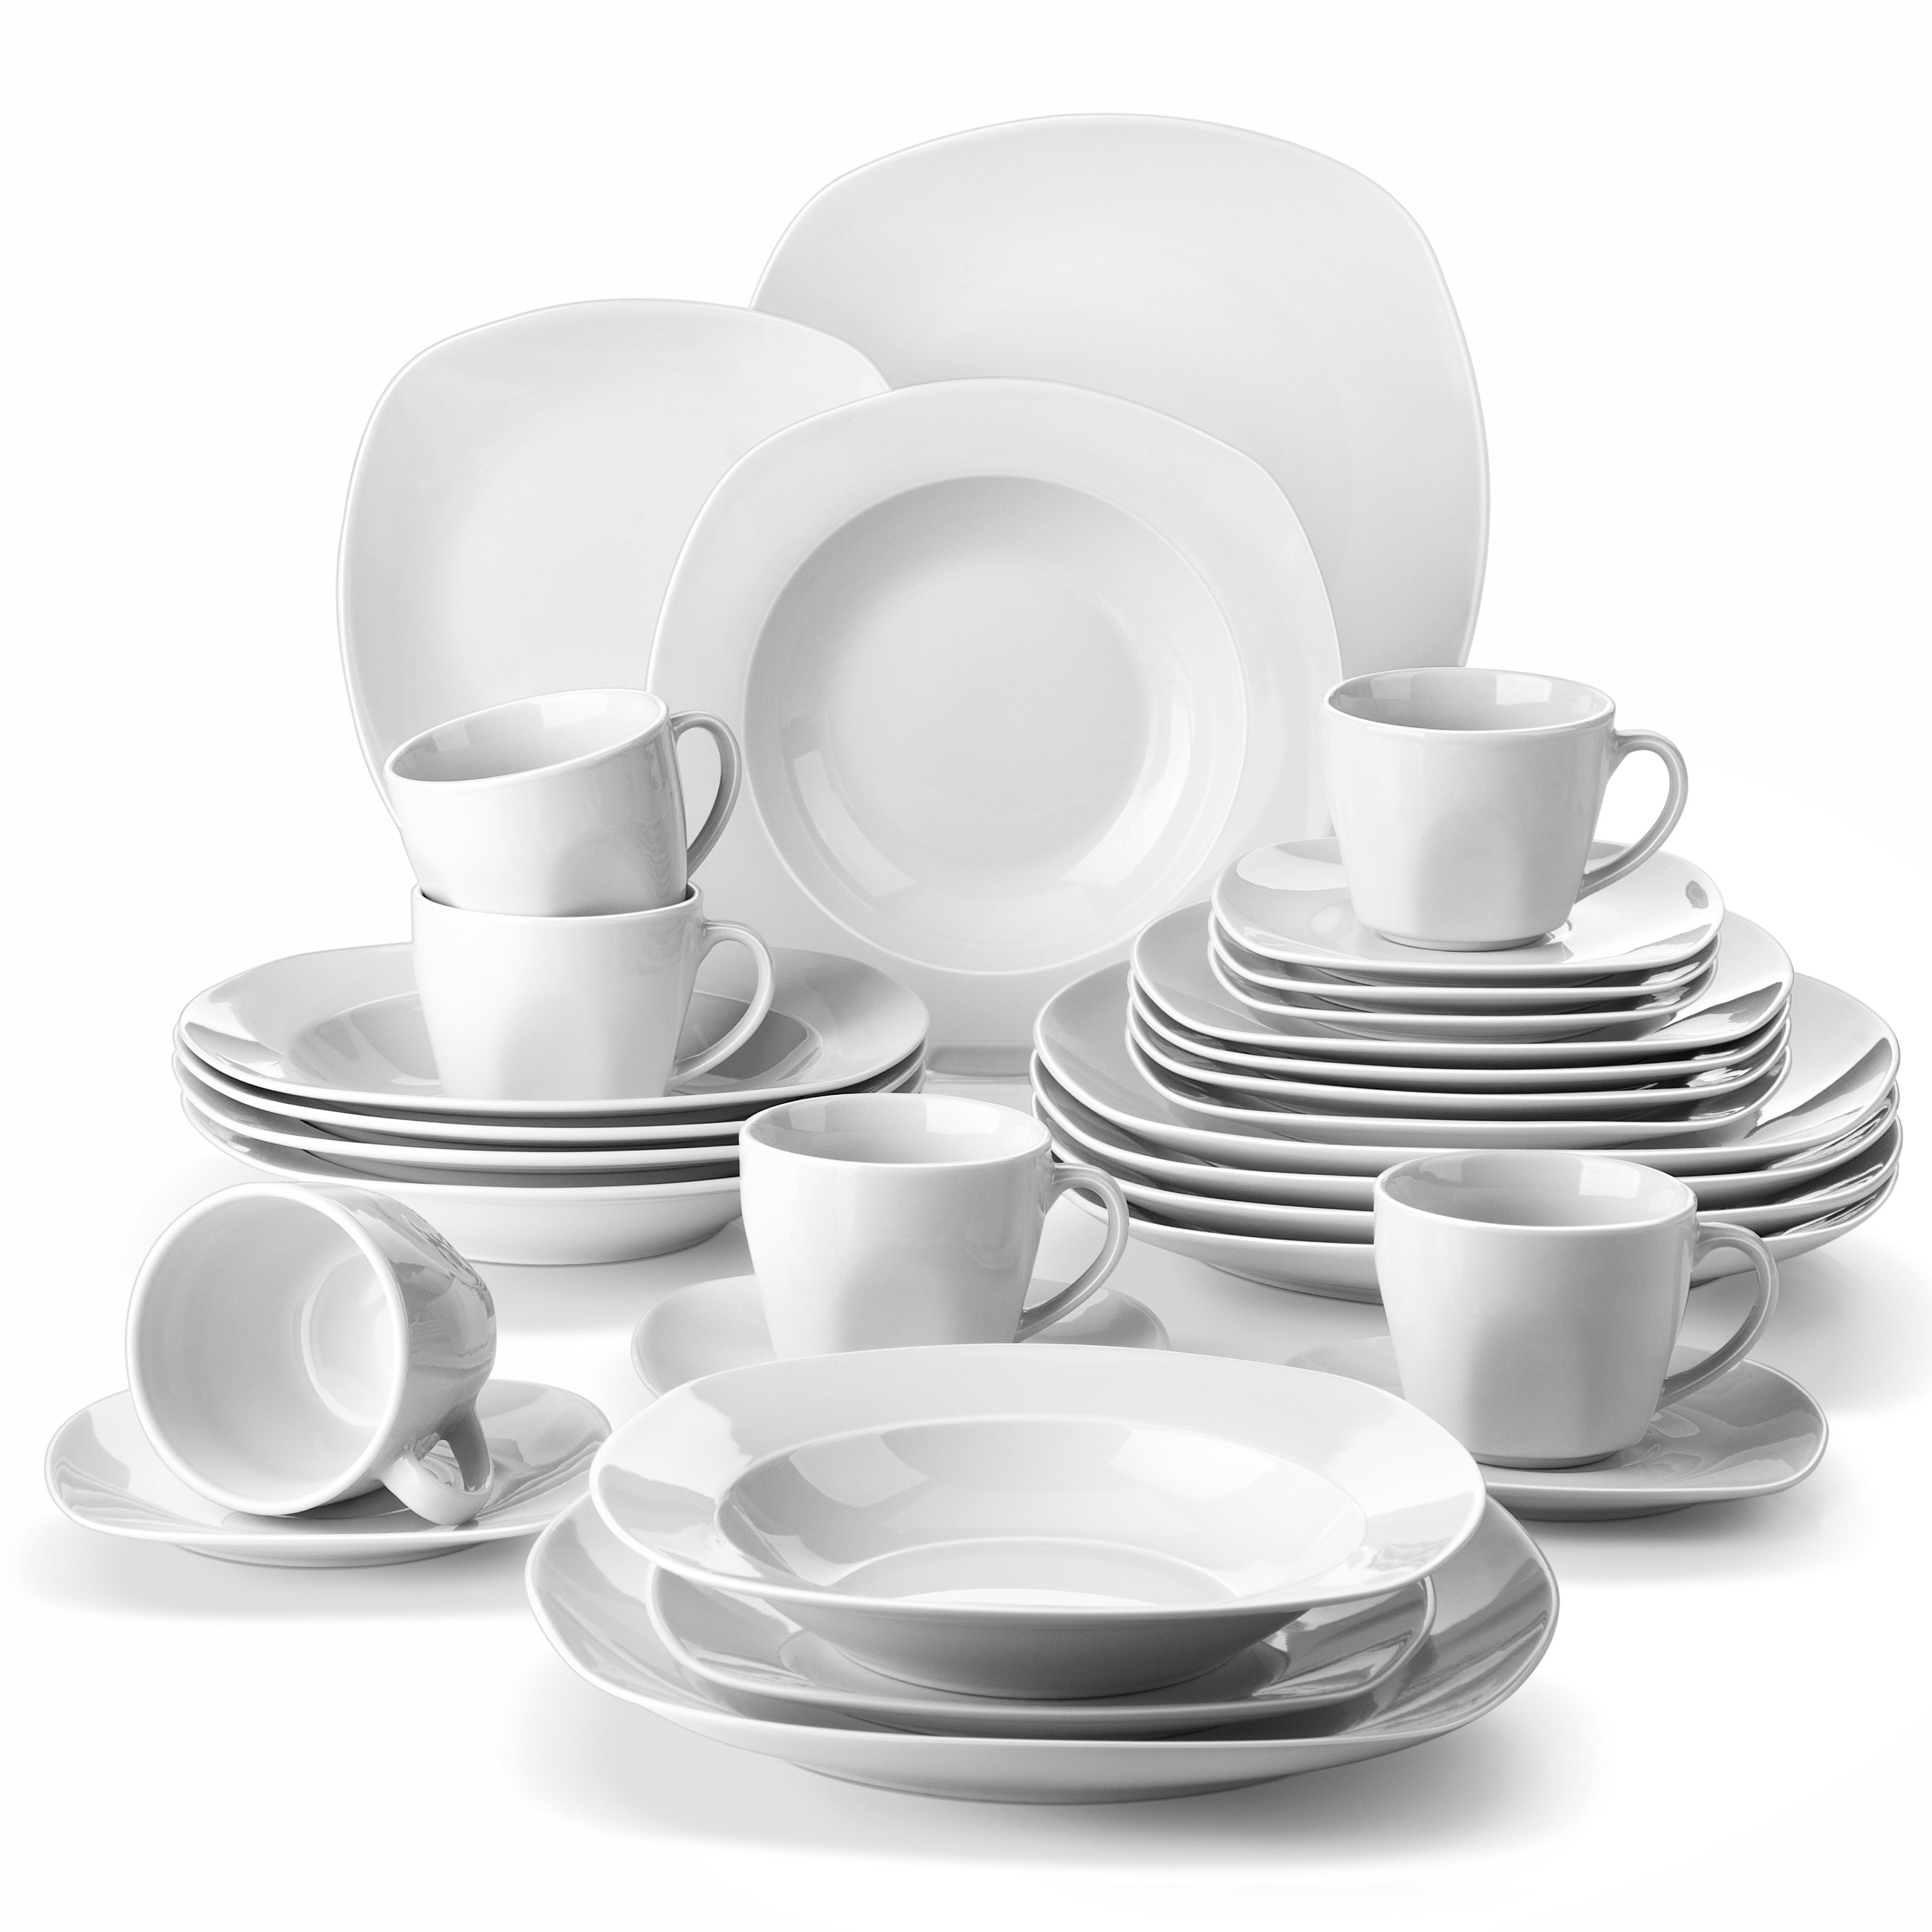 MALACASA Julia 6-Piece White Square Porcelain Dinner Plate Set